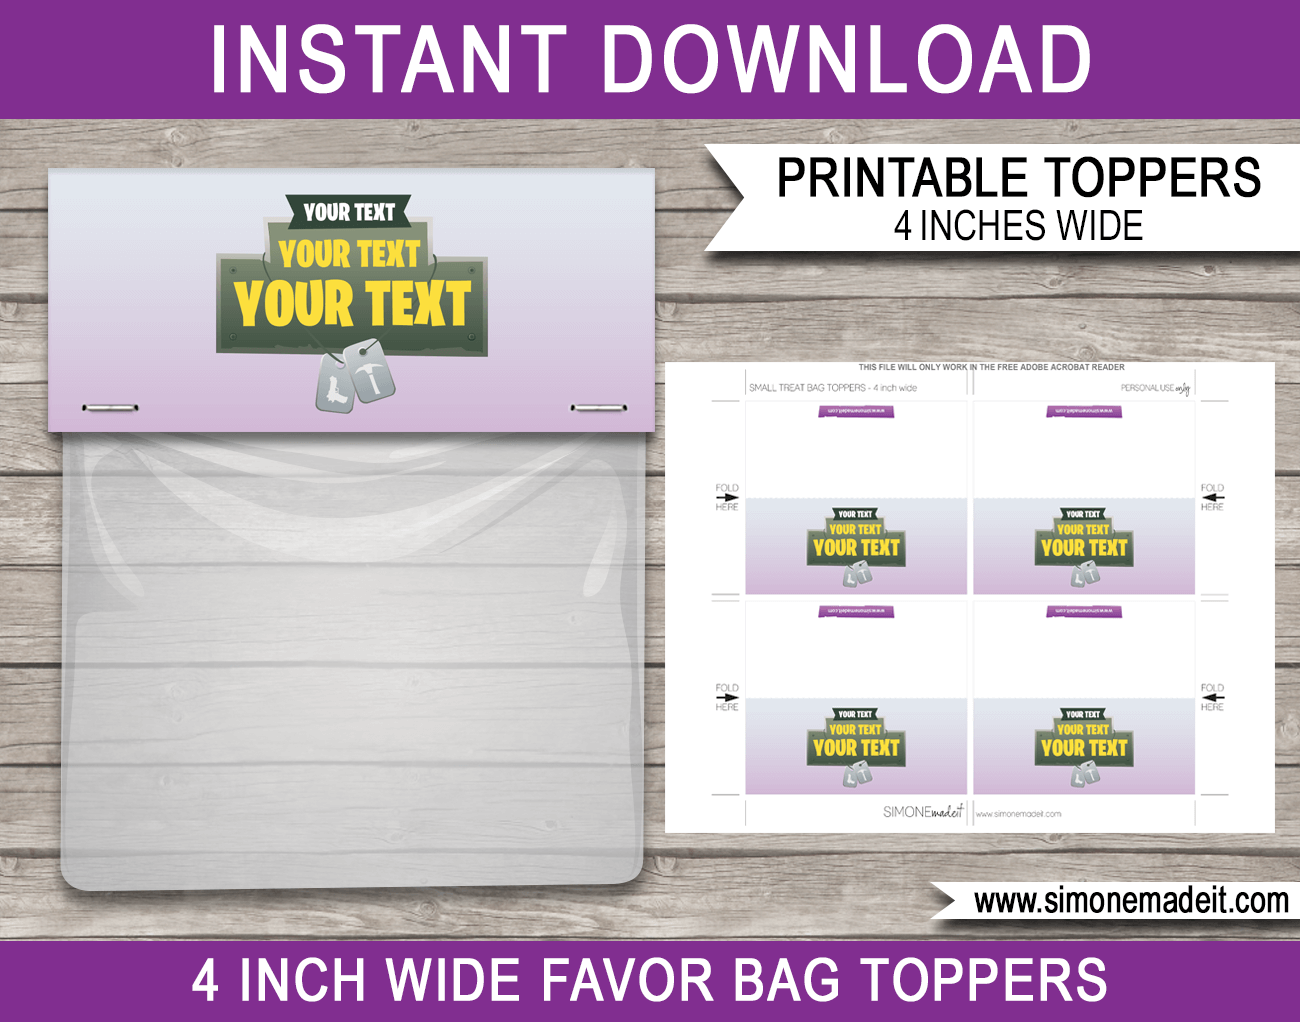 Printable Fortnite Favor Bag Toppers | Fortnite Birthday Party Favors | DIY Editable and Printable Template | INSTANT DOWNLOAD via SIMONEmadeit.com